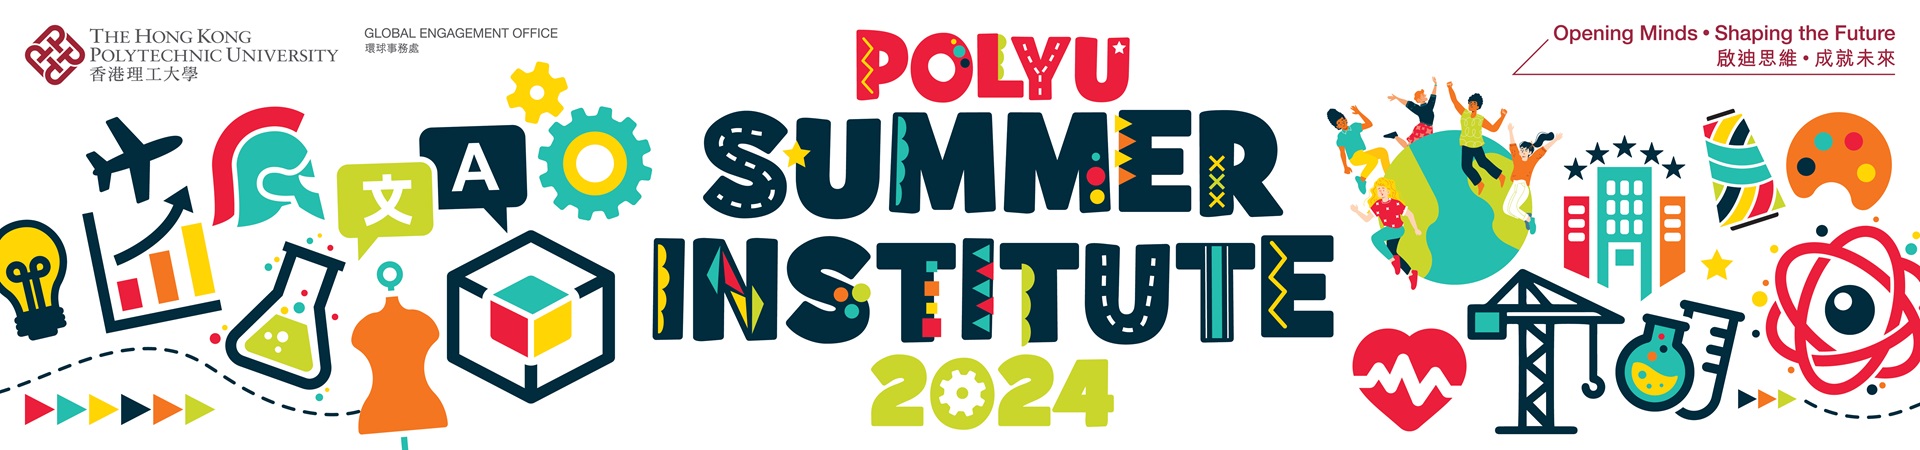 PolyU Summer Institute 2024